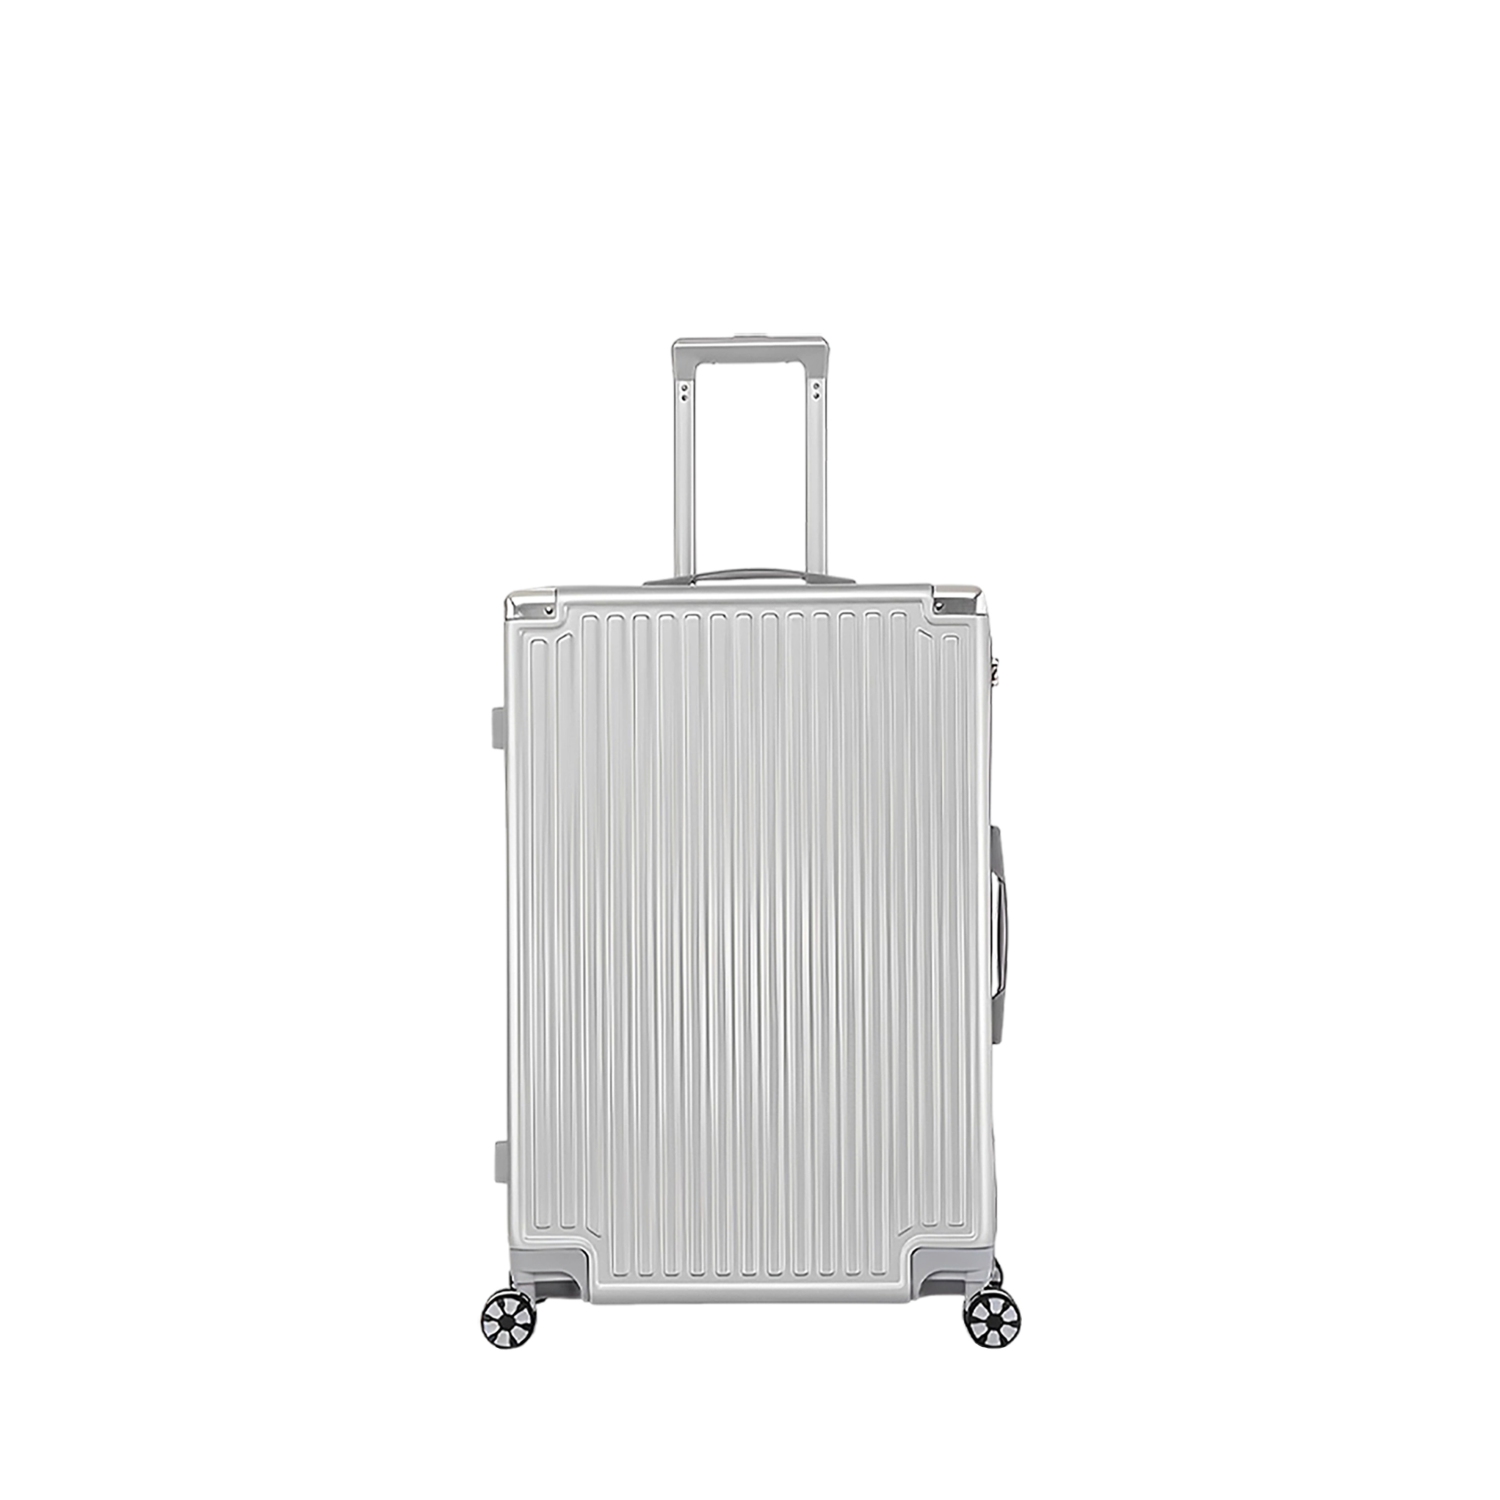 WINGOMART Luggage Lightweight Durable PC+ABS Hardshell, Double Spinner Wheels, TSA Lock - 24in - Silver